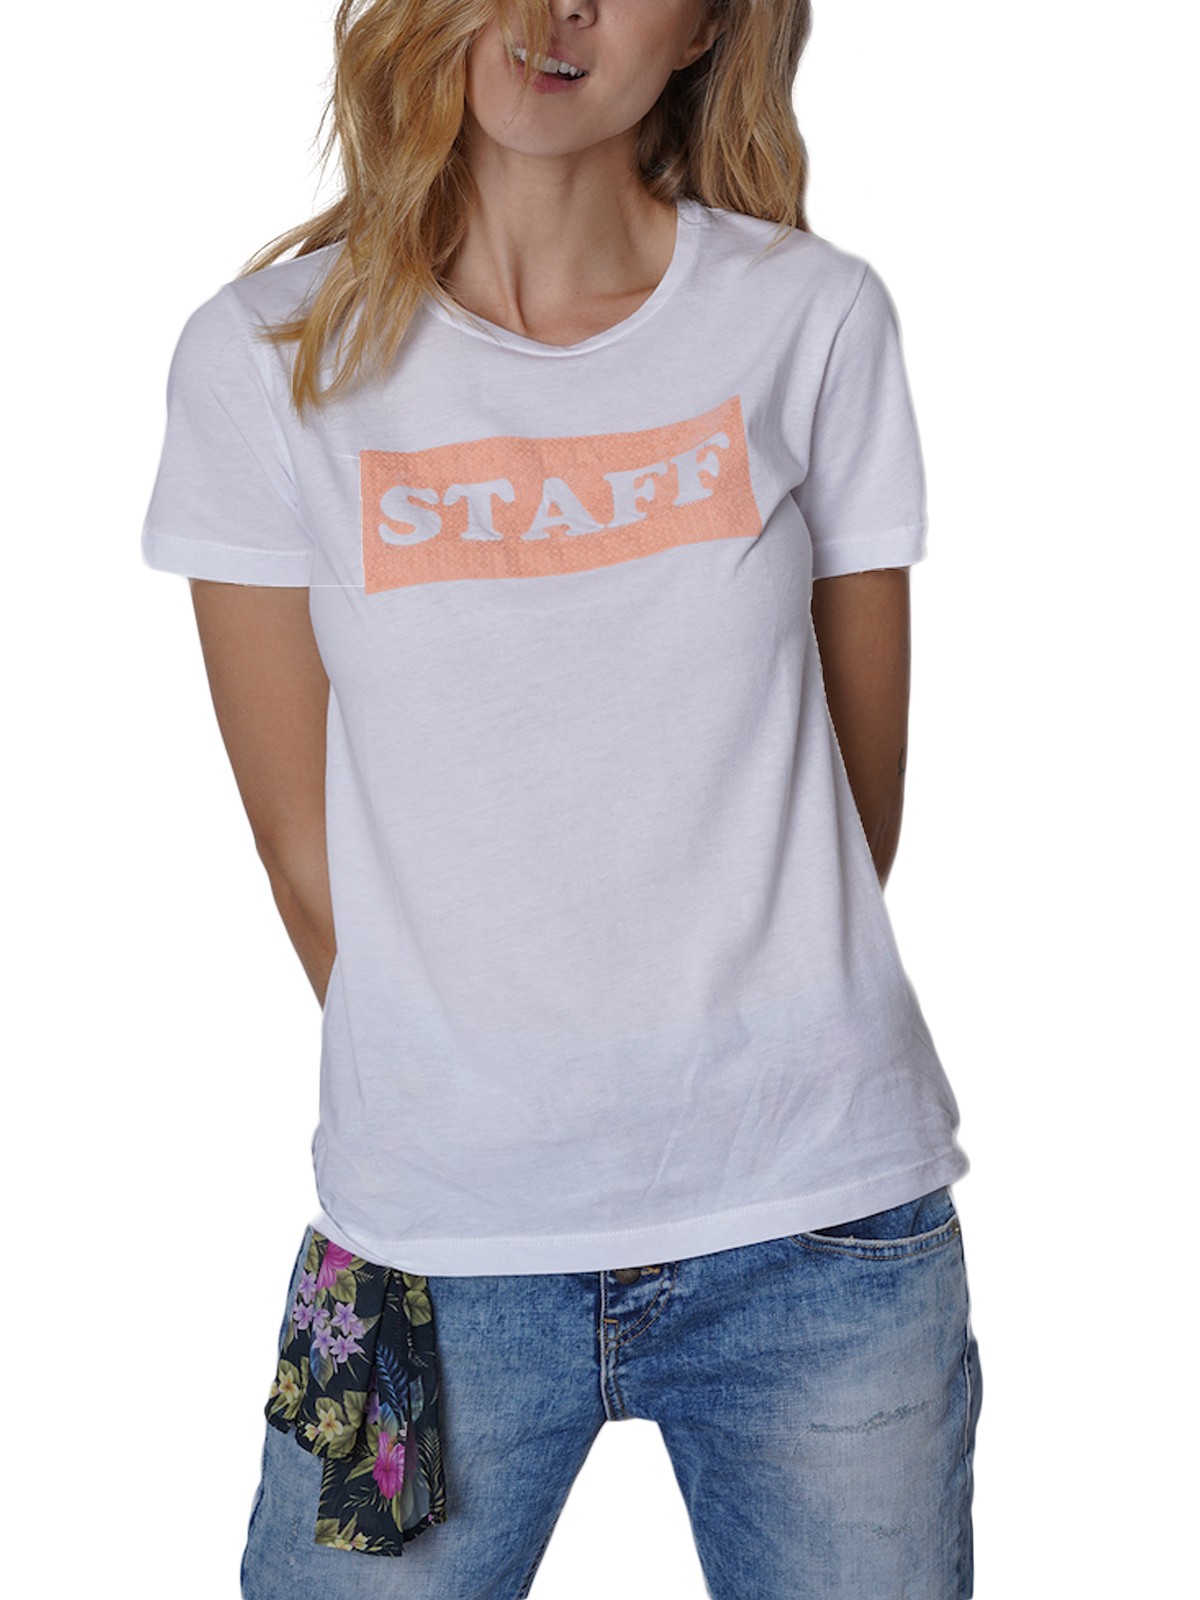   Staff | Donna Woman Tee | Womens T-Shirts